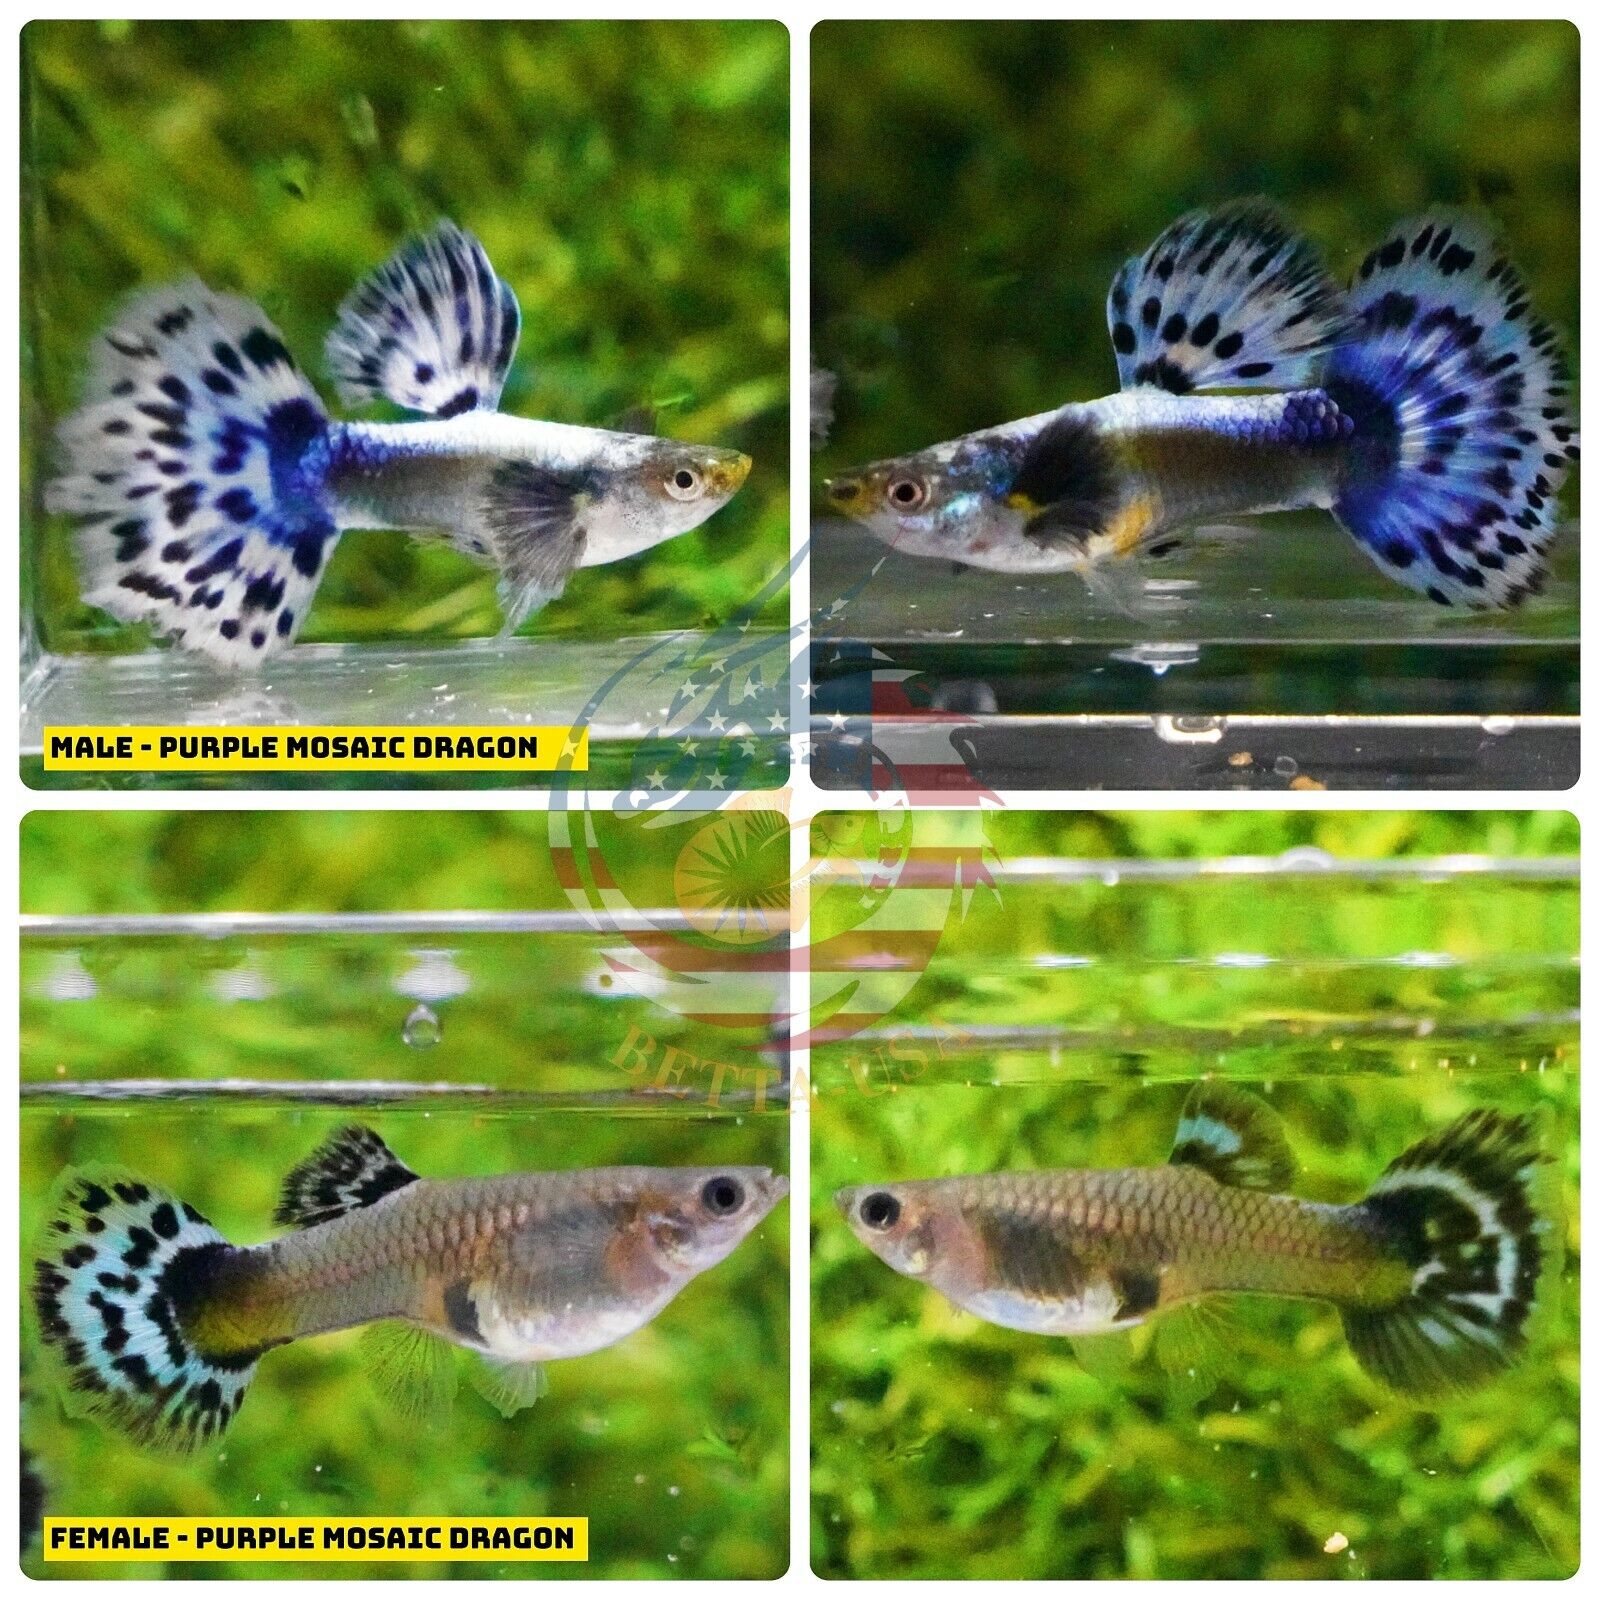 guppy fish types